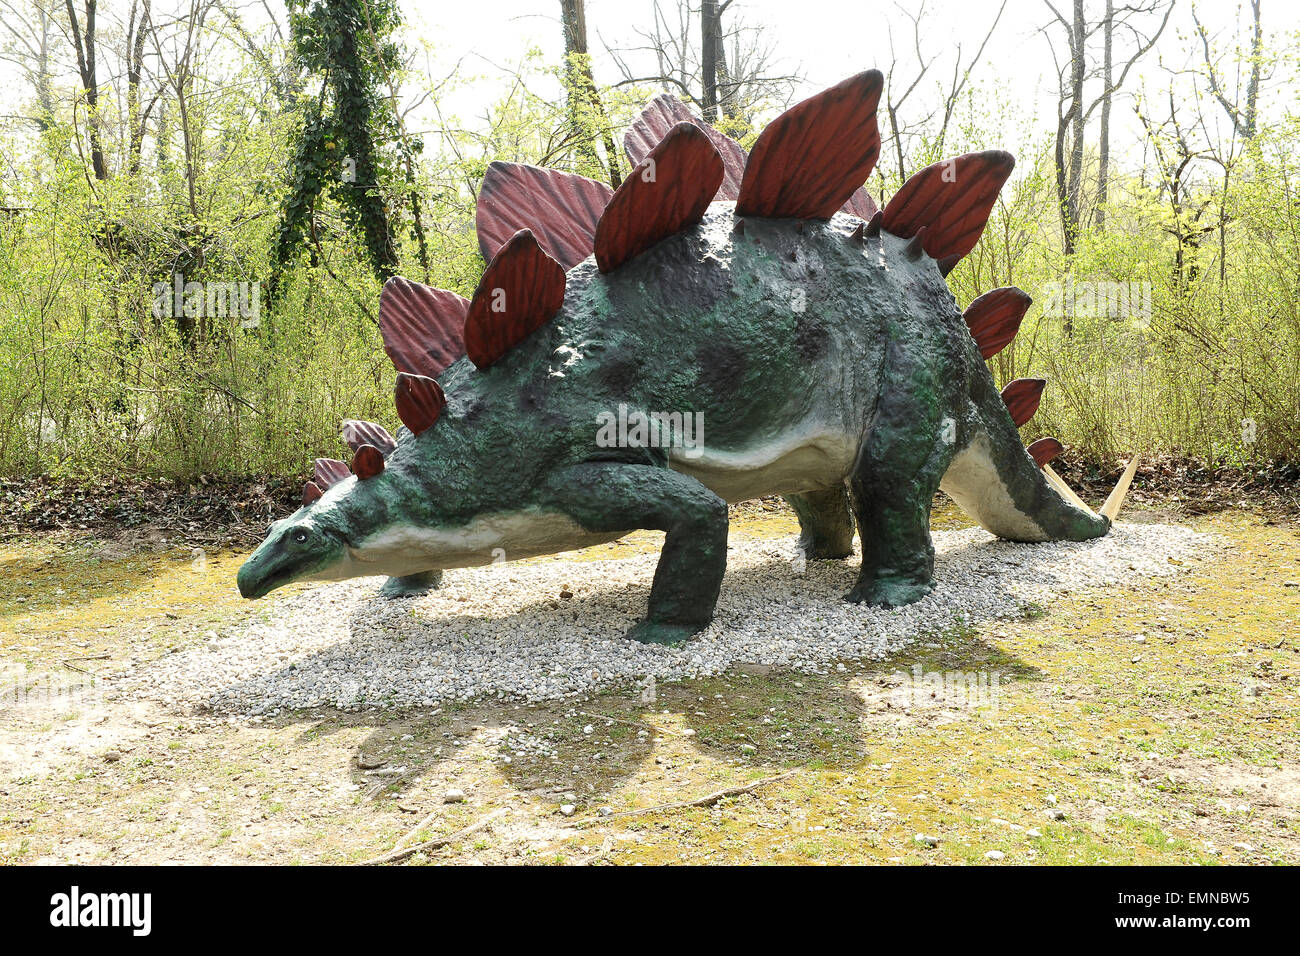 Dinosauro Stegosaurus dal tardo Giurassico in Outdoor preistorica parco a tema Foto Stock